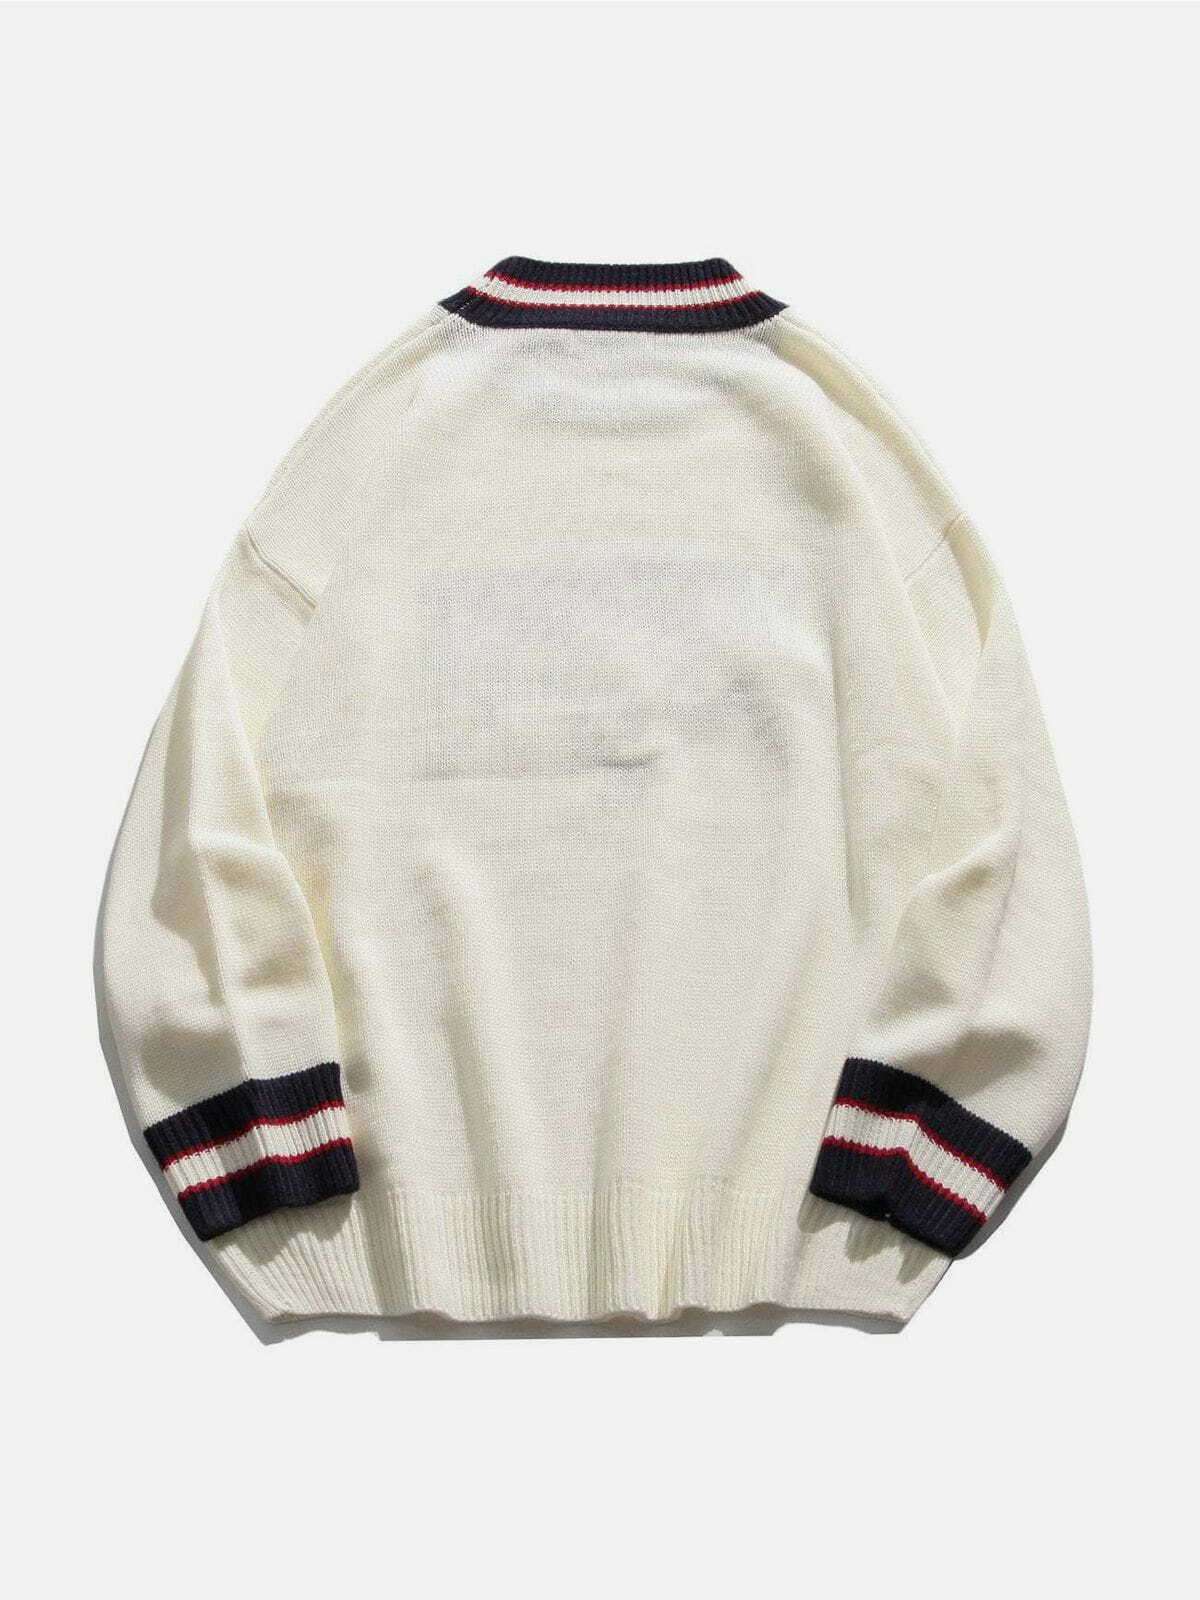 retro patchwork sweater quirky & urban fashion statement 1294